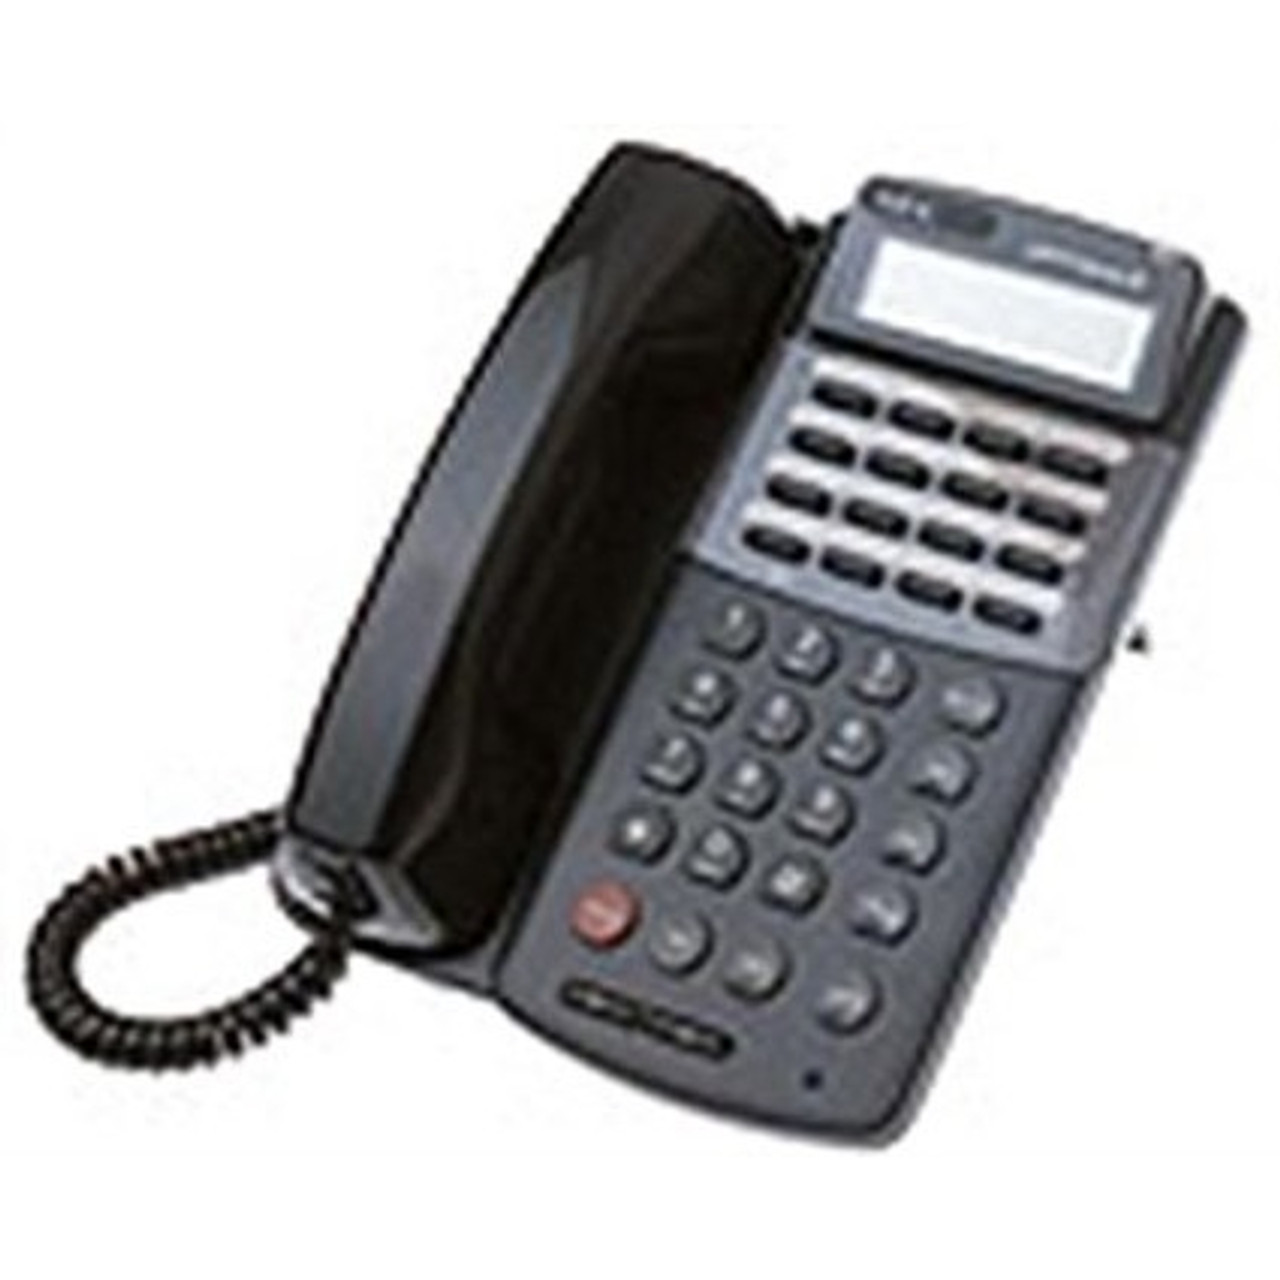 NEC ETJ-16DD-2 Phone